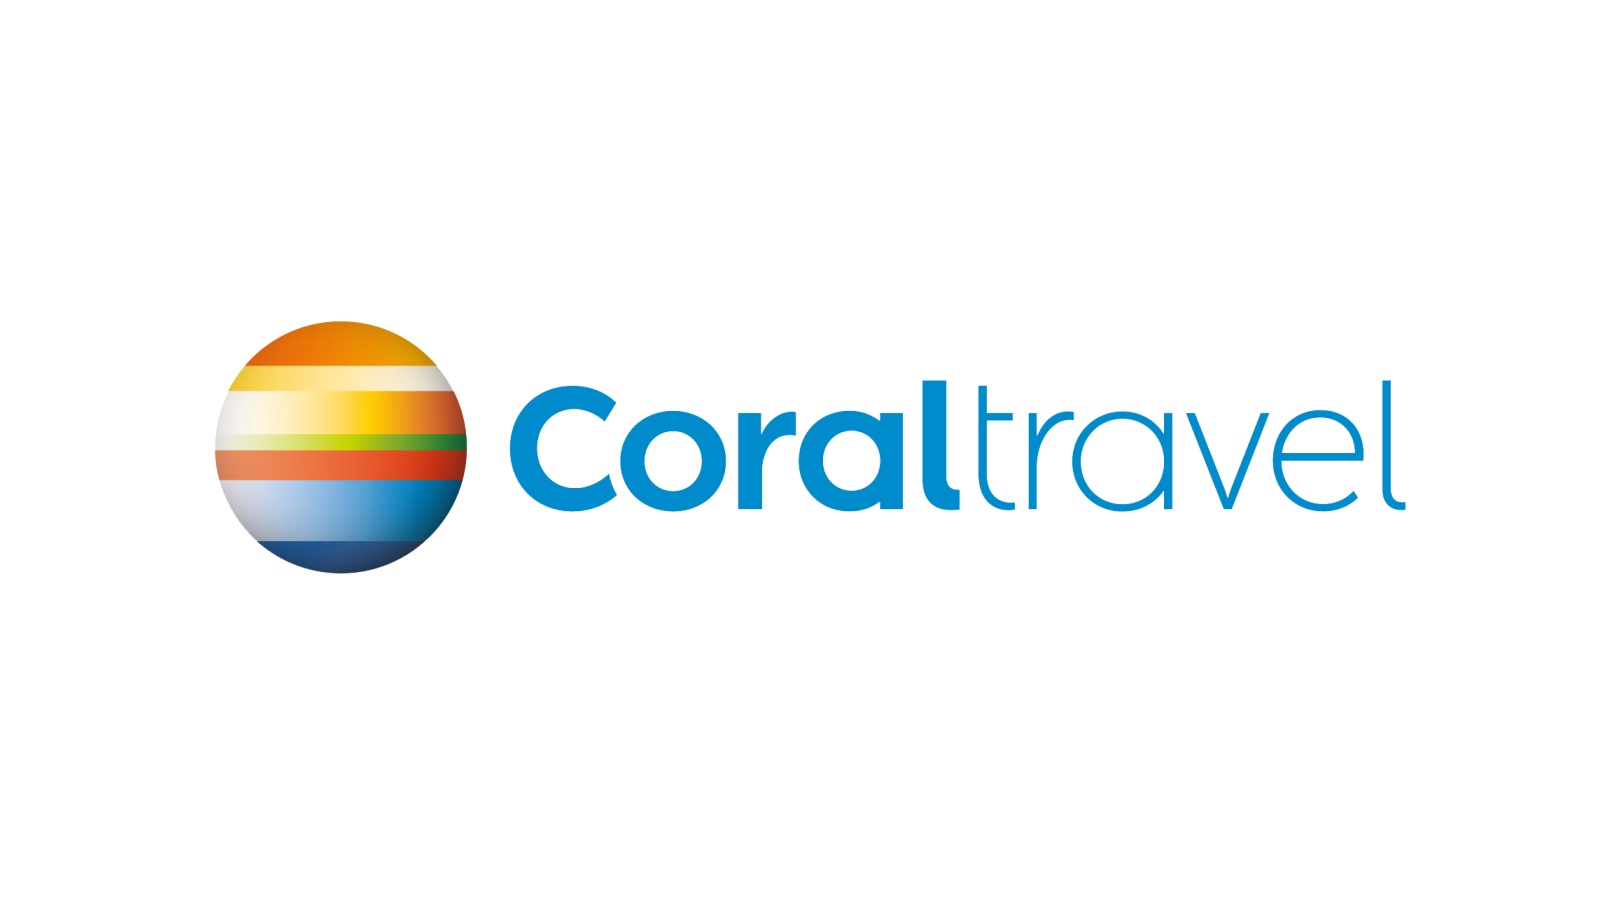 Coral логотип. Корал Тревел лого. Логотип корол Тревел. Корал Тревел реестр туроператоров.